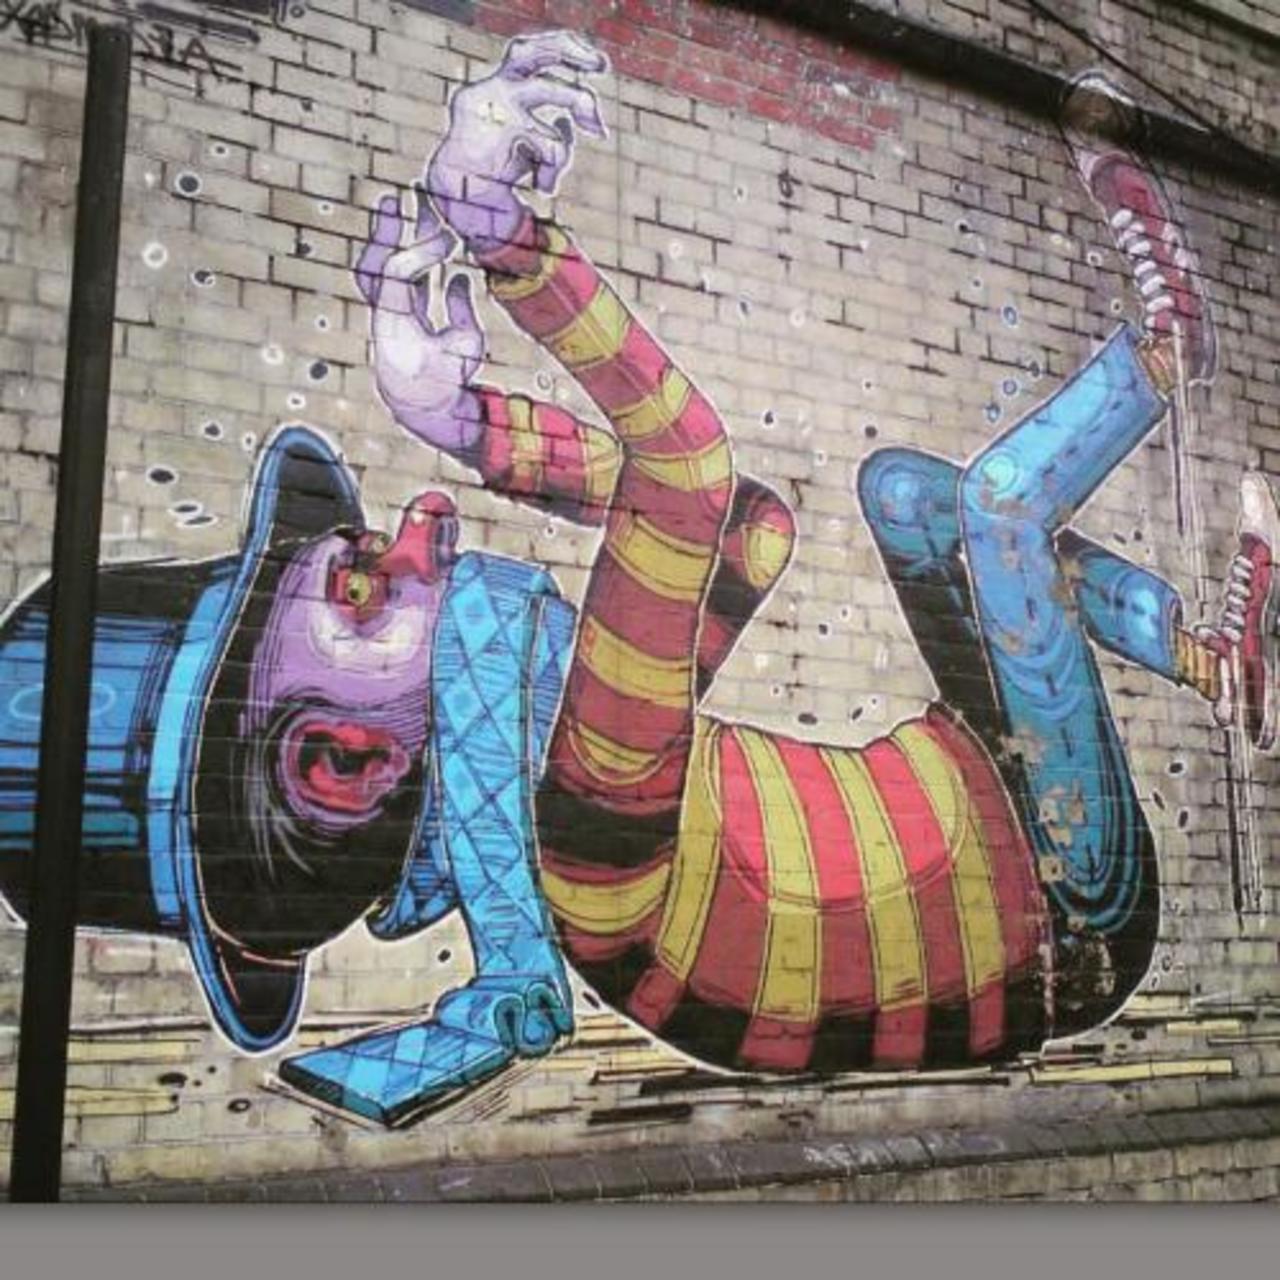 Aryz #london #photo #mural #murales #urbanwalls #graffiti #urban... #ShareArt - - https://wp.me/p6qjkV-3ua http://t.co/fhC8cvicyO